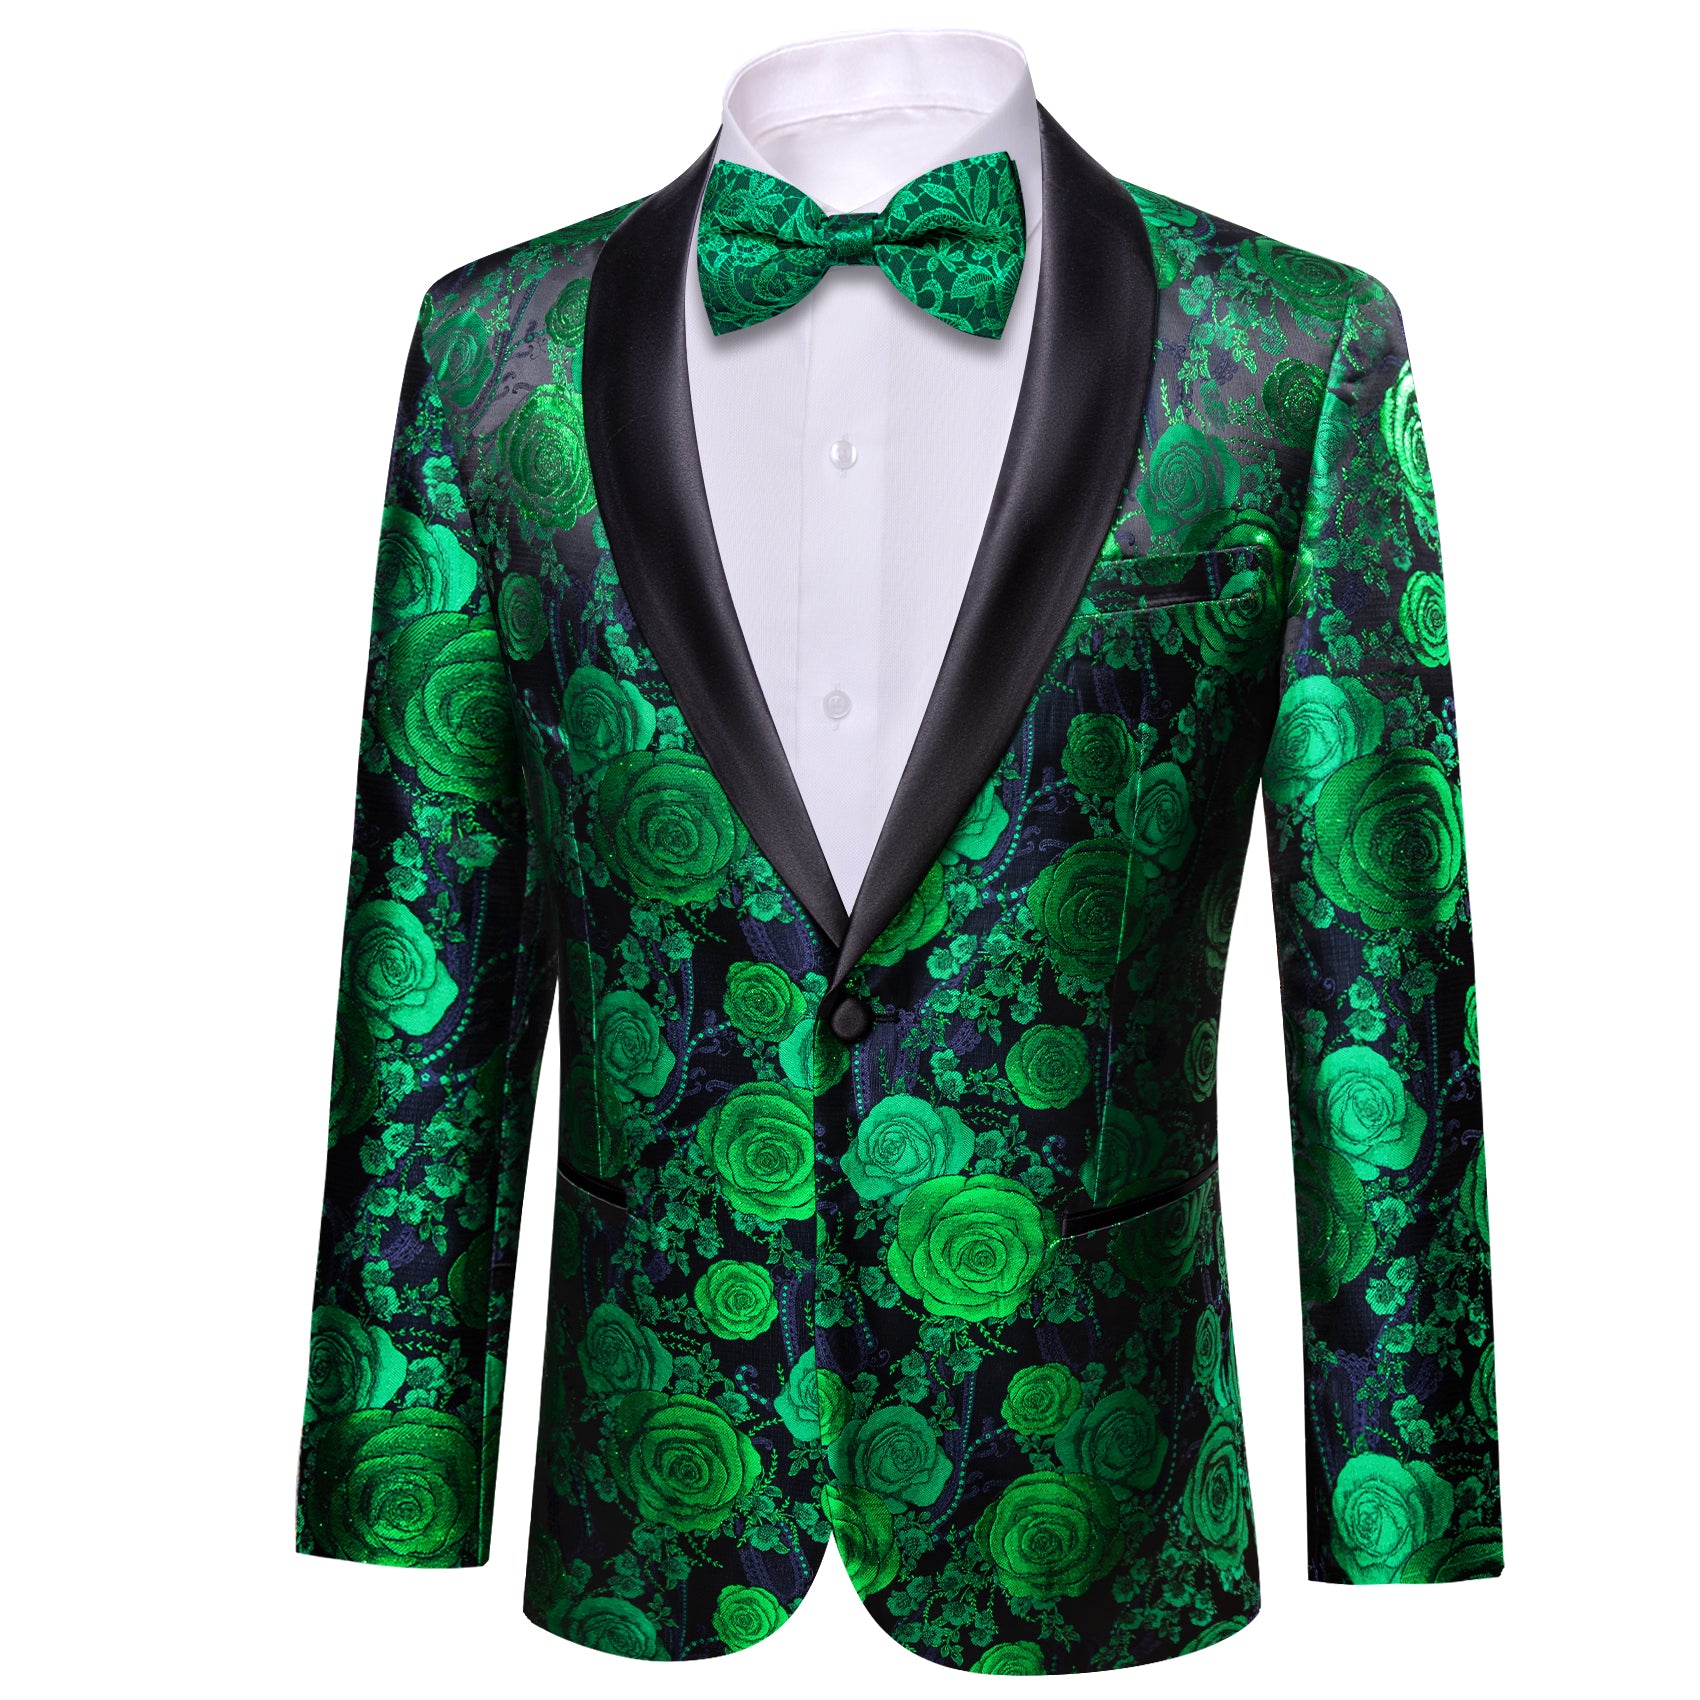 Men's Dress Party Green Blue Flower Suit Jacket Slim One Button Stylish Blazer